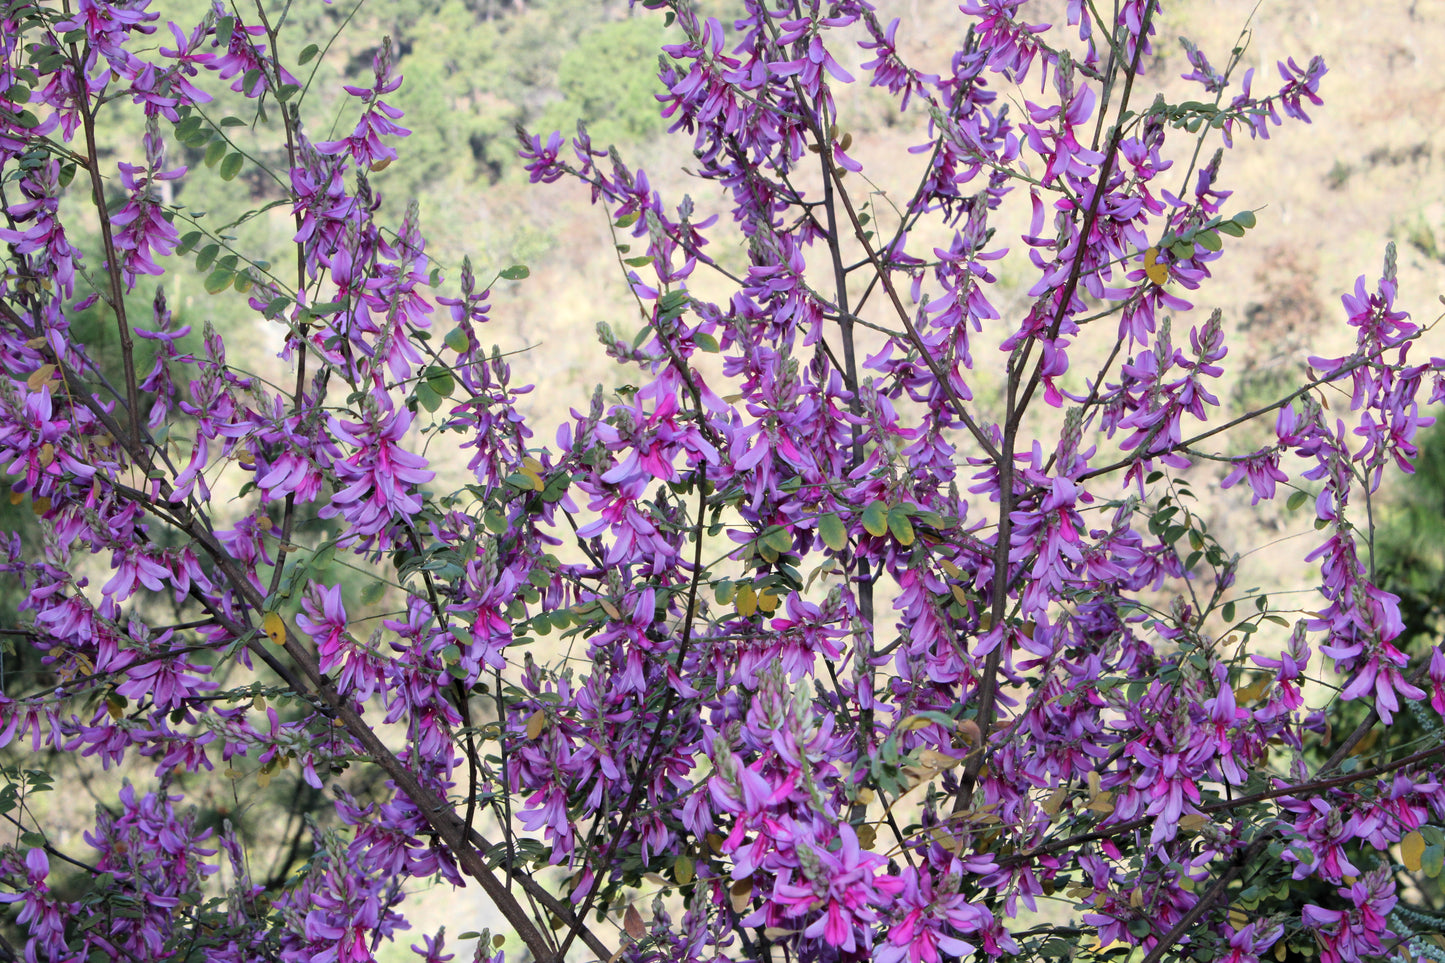 50 TRUE INDIGO Dye Indigo Indigofera Tinctoria Pink Purple Sub Shrub Flower Seeds